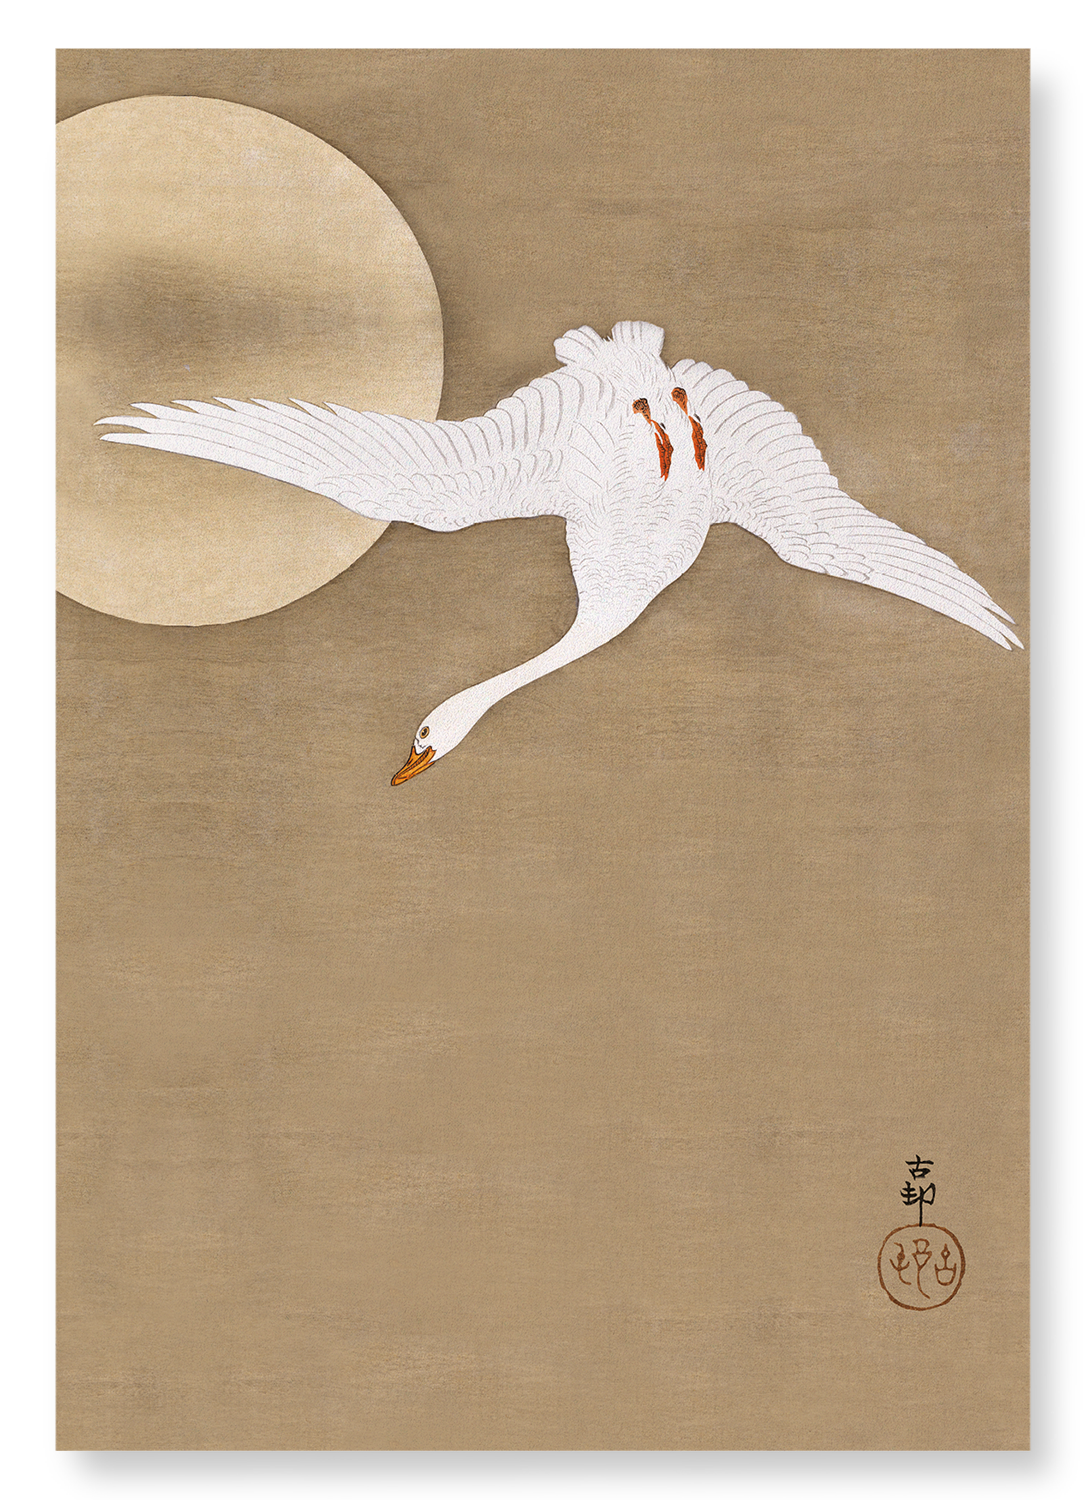 GOOSE IN FLIGHT: Japanese Art Print